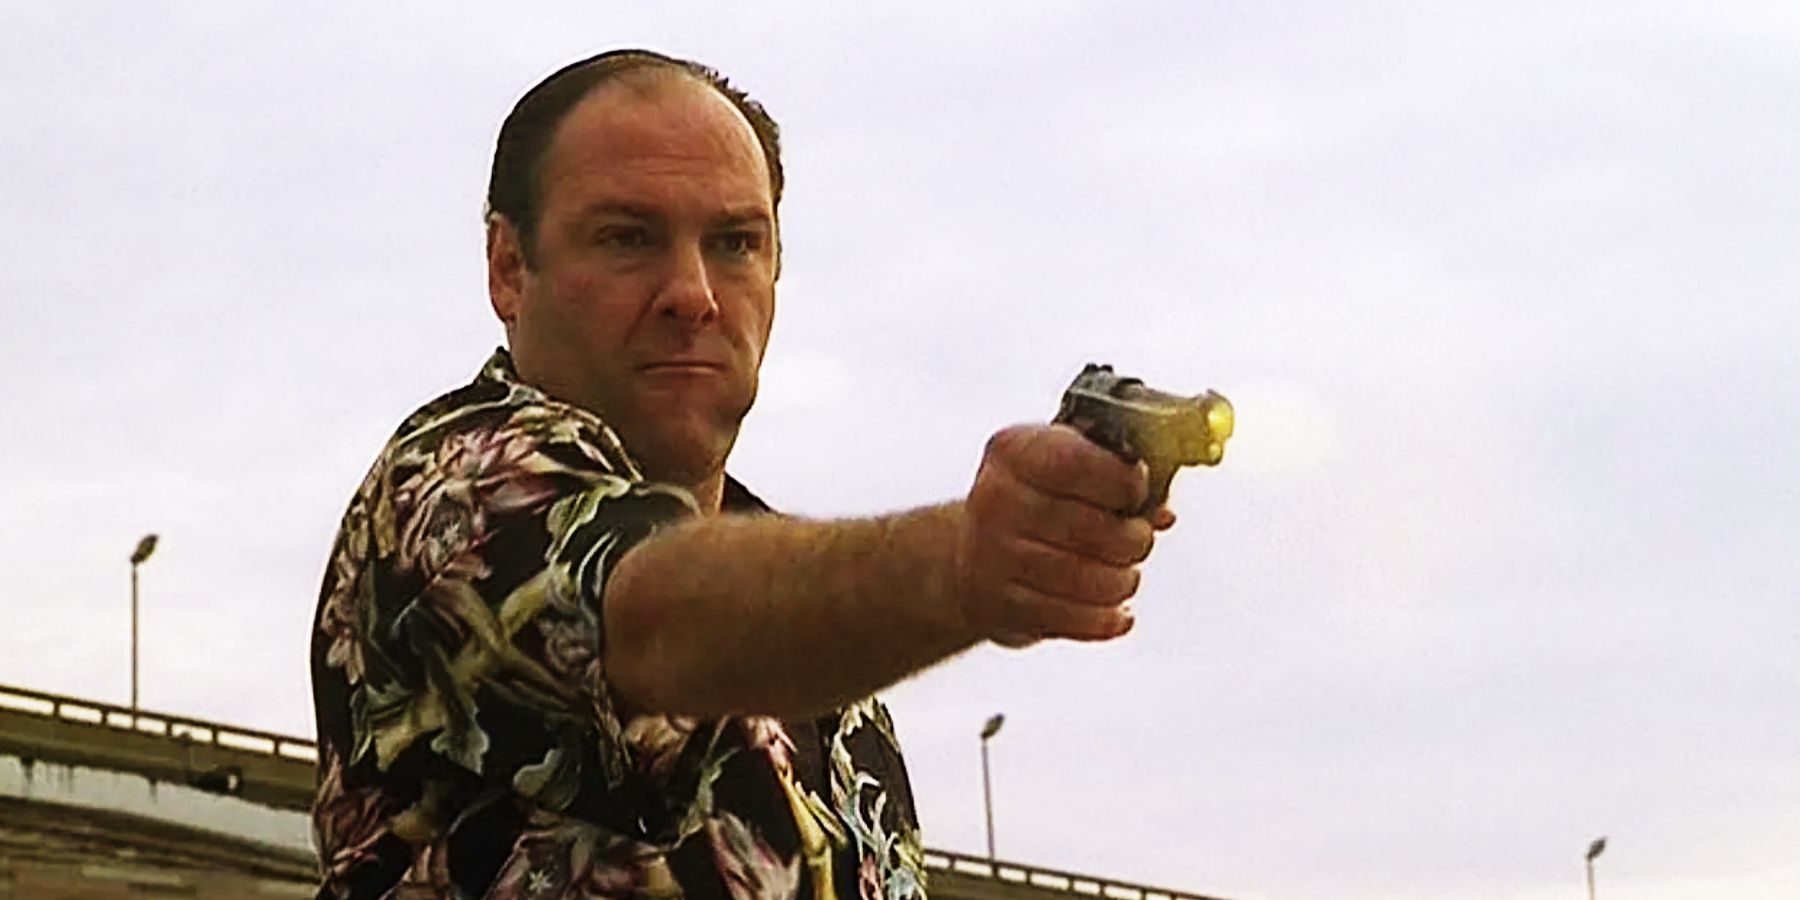 Tony Soprano in his black floral kill shirt, whacking Chucky Signore